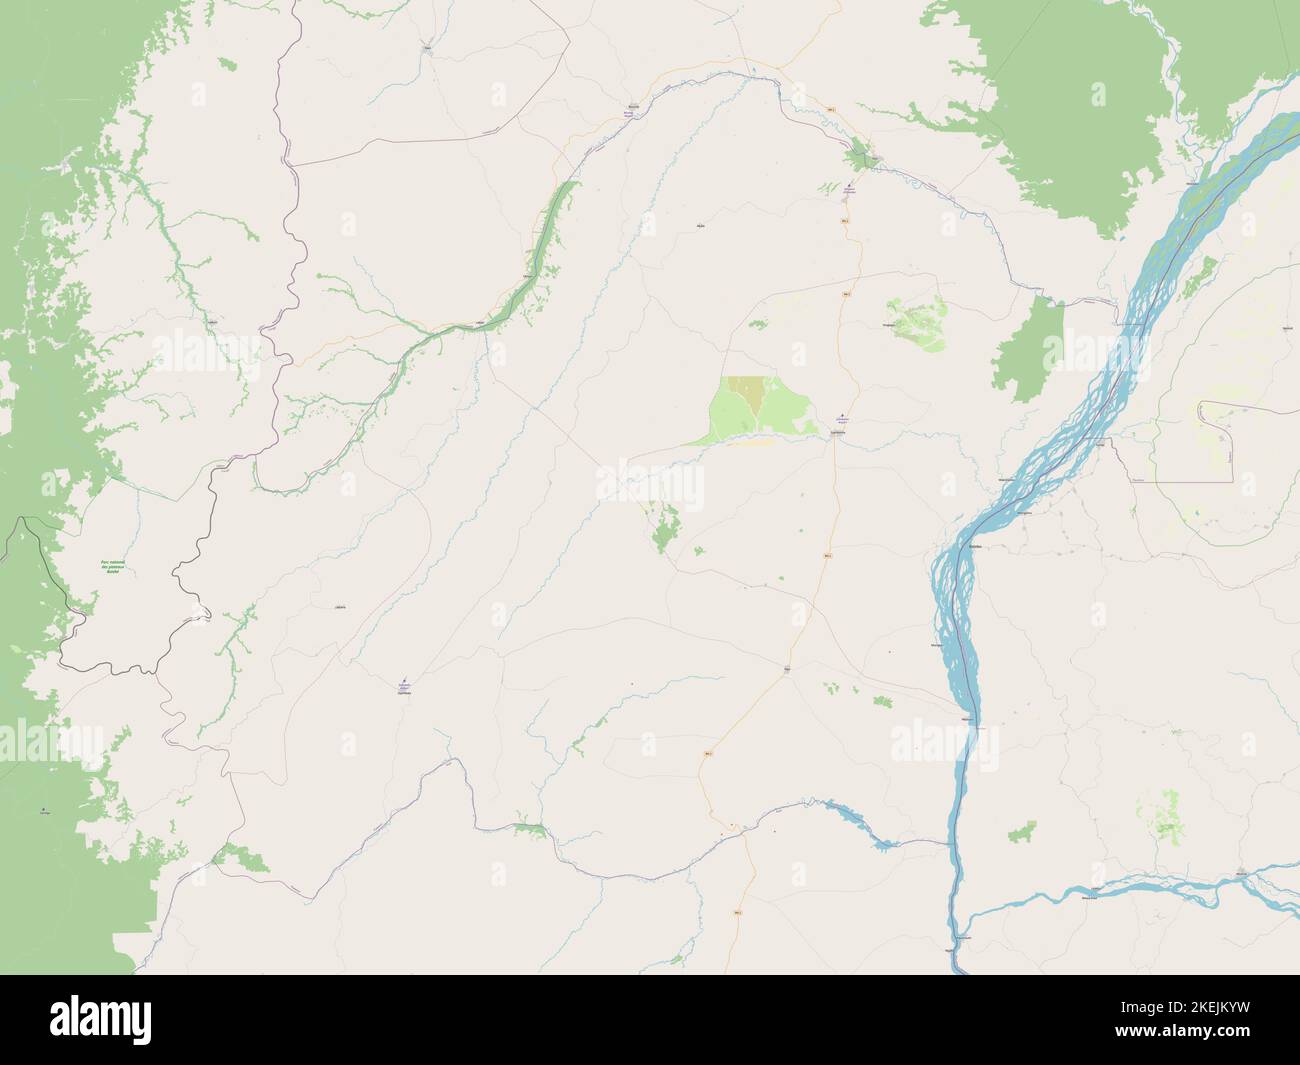 Plateaux, region of Republic of Congo. Open Street Map Stock Photo